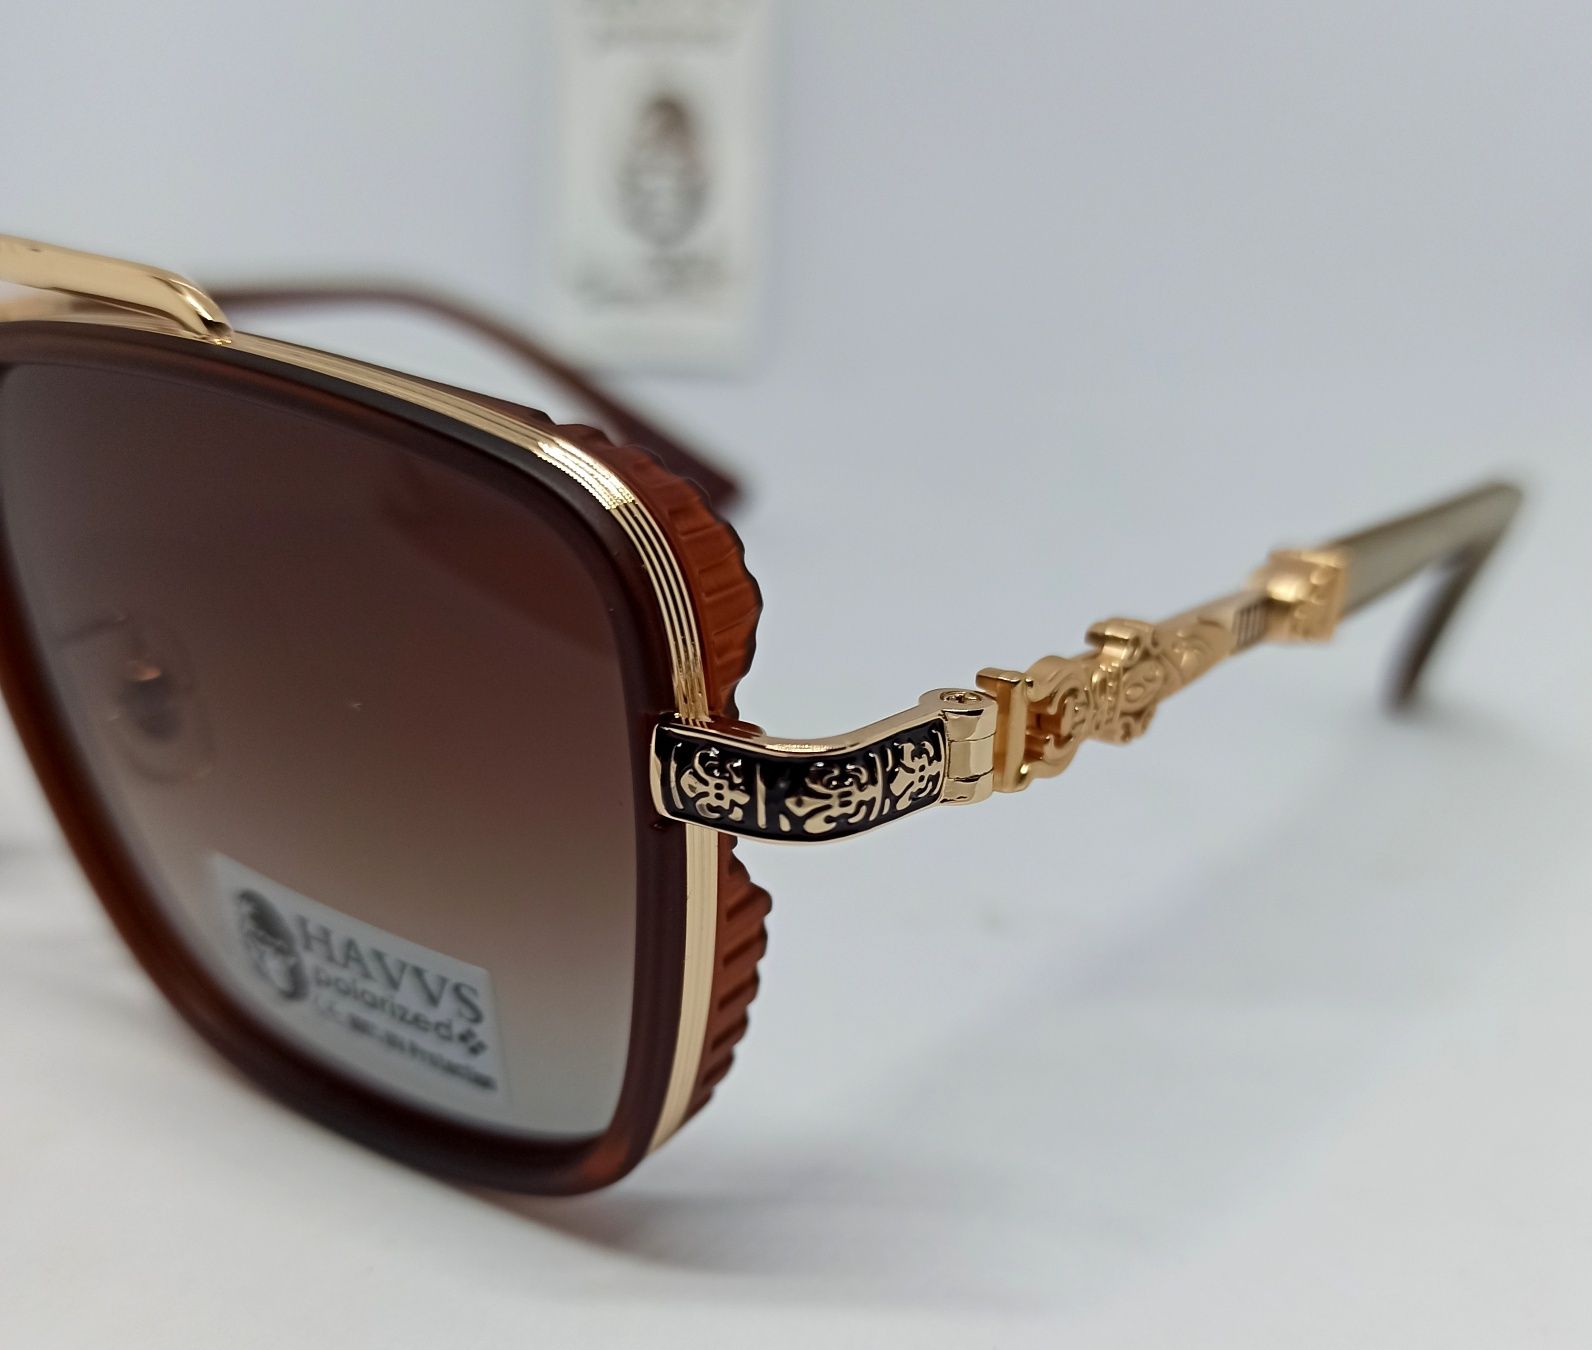 HAVVS очки мужские оригинал в стиле Chrome Hearts коричневые в золоте